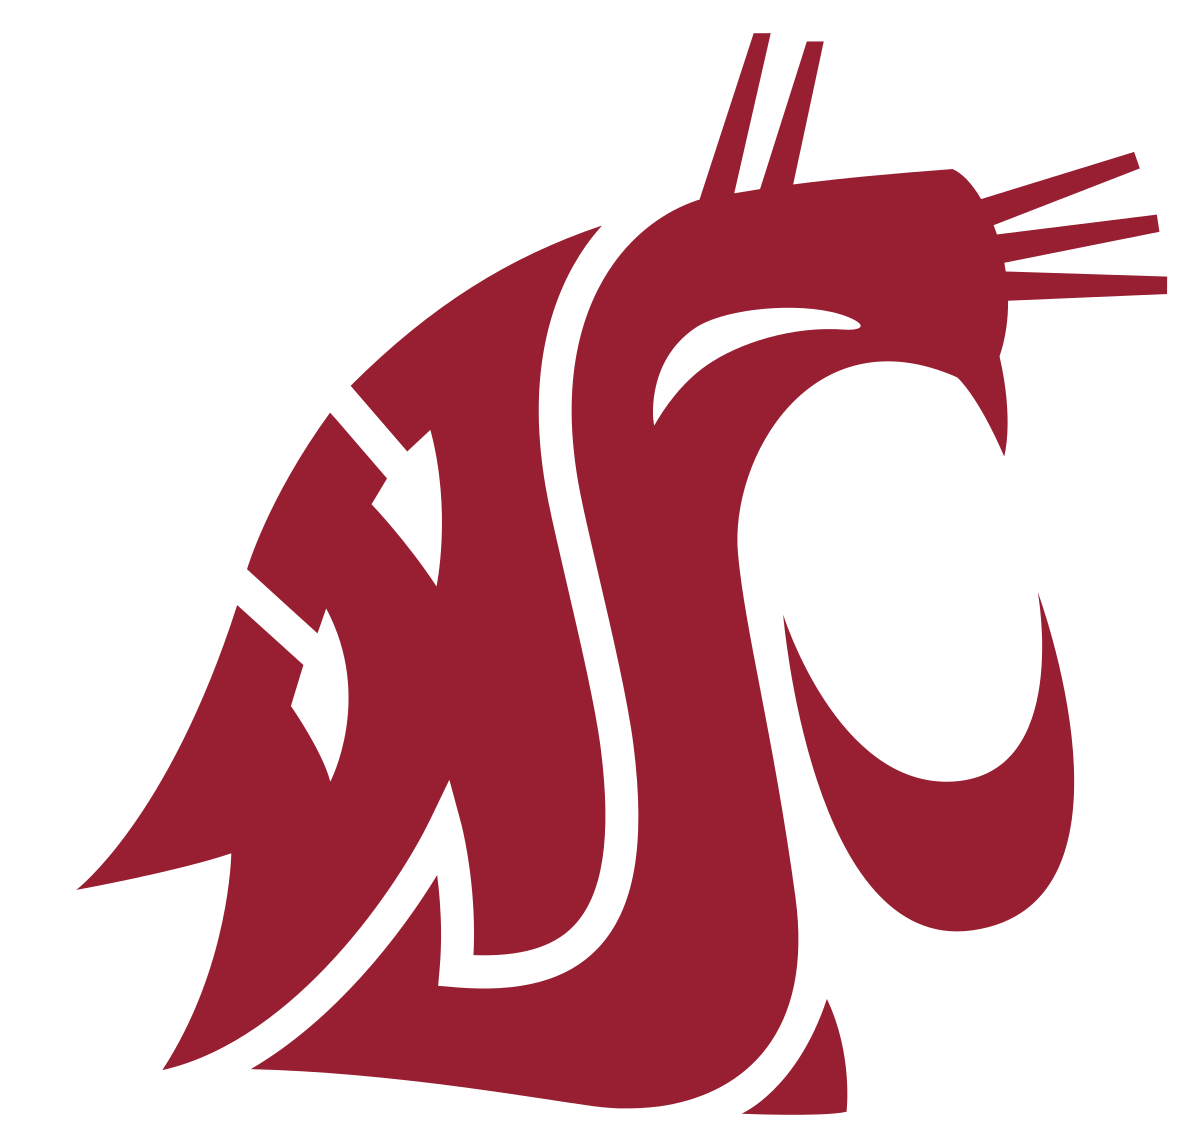 Washington State Cougars - Wikipedia